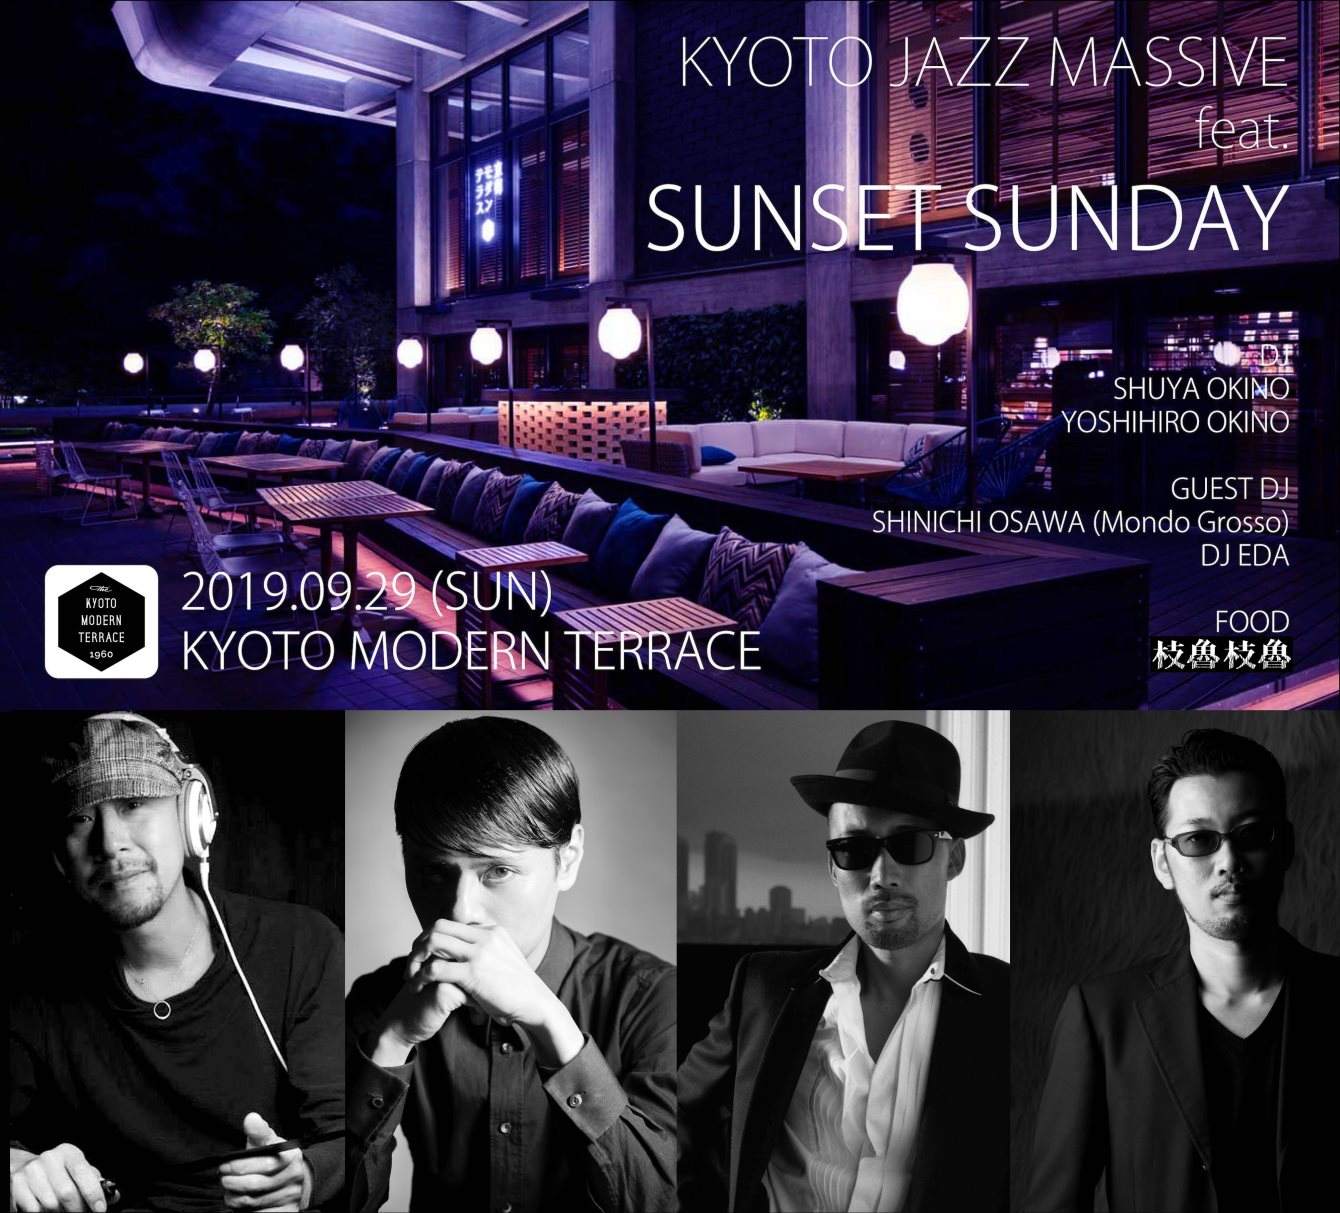 Kyoto Jazz Massive Feat. Sunset Sunday - Página frontal